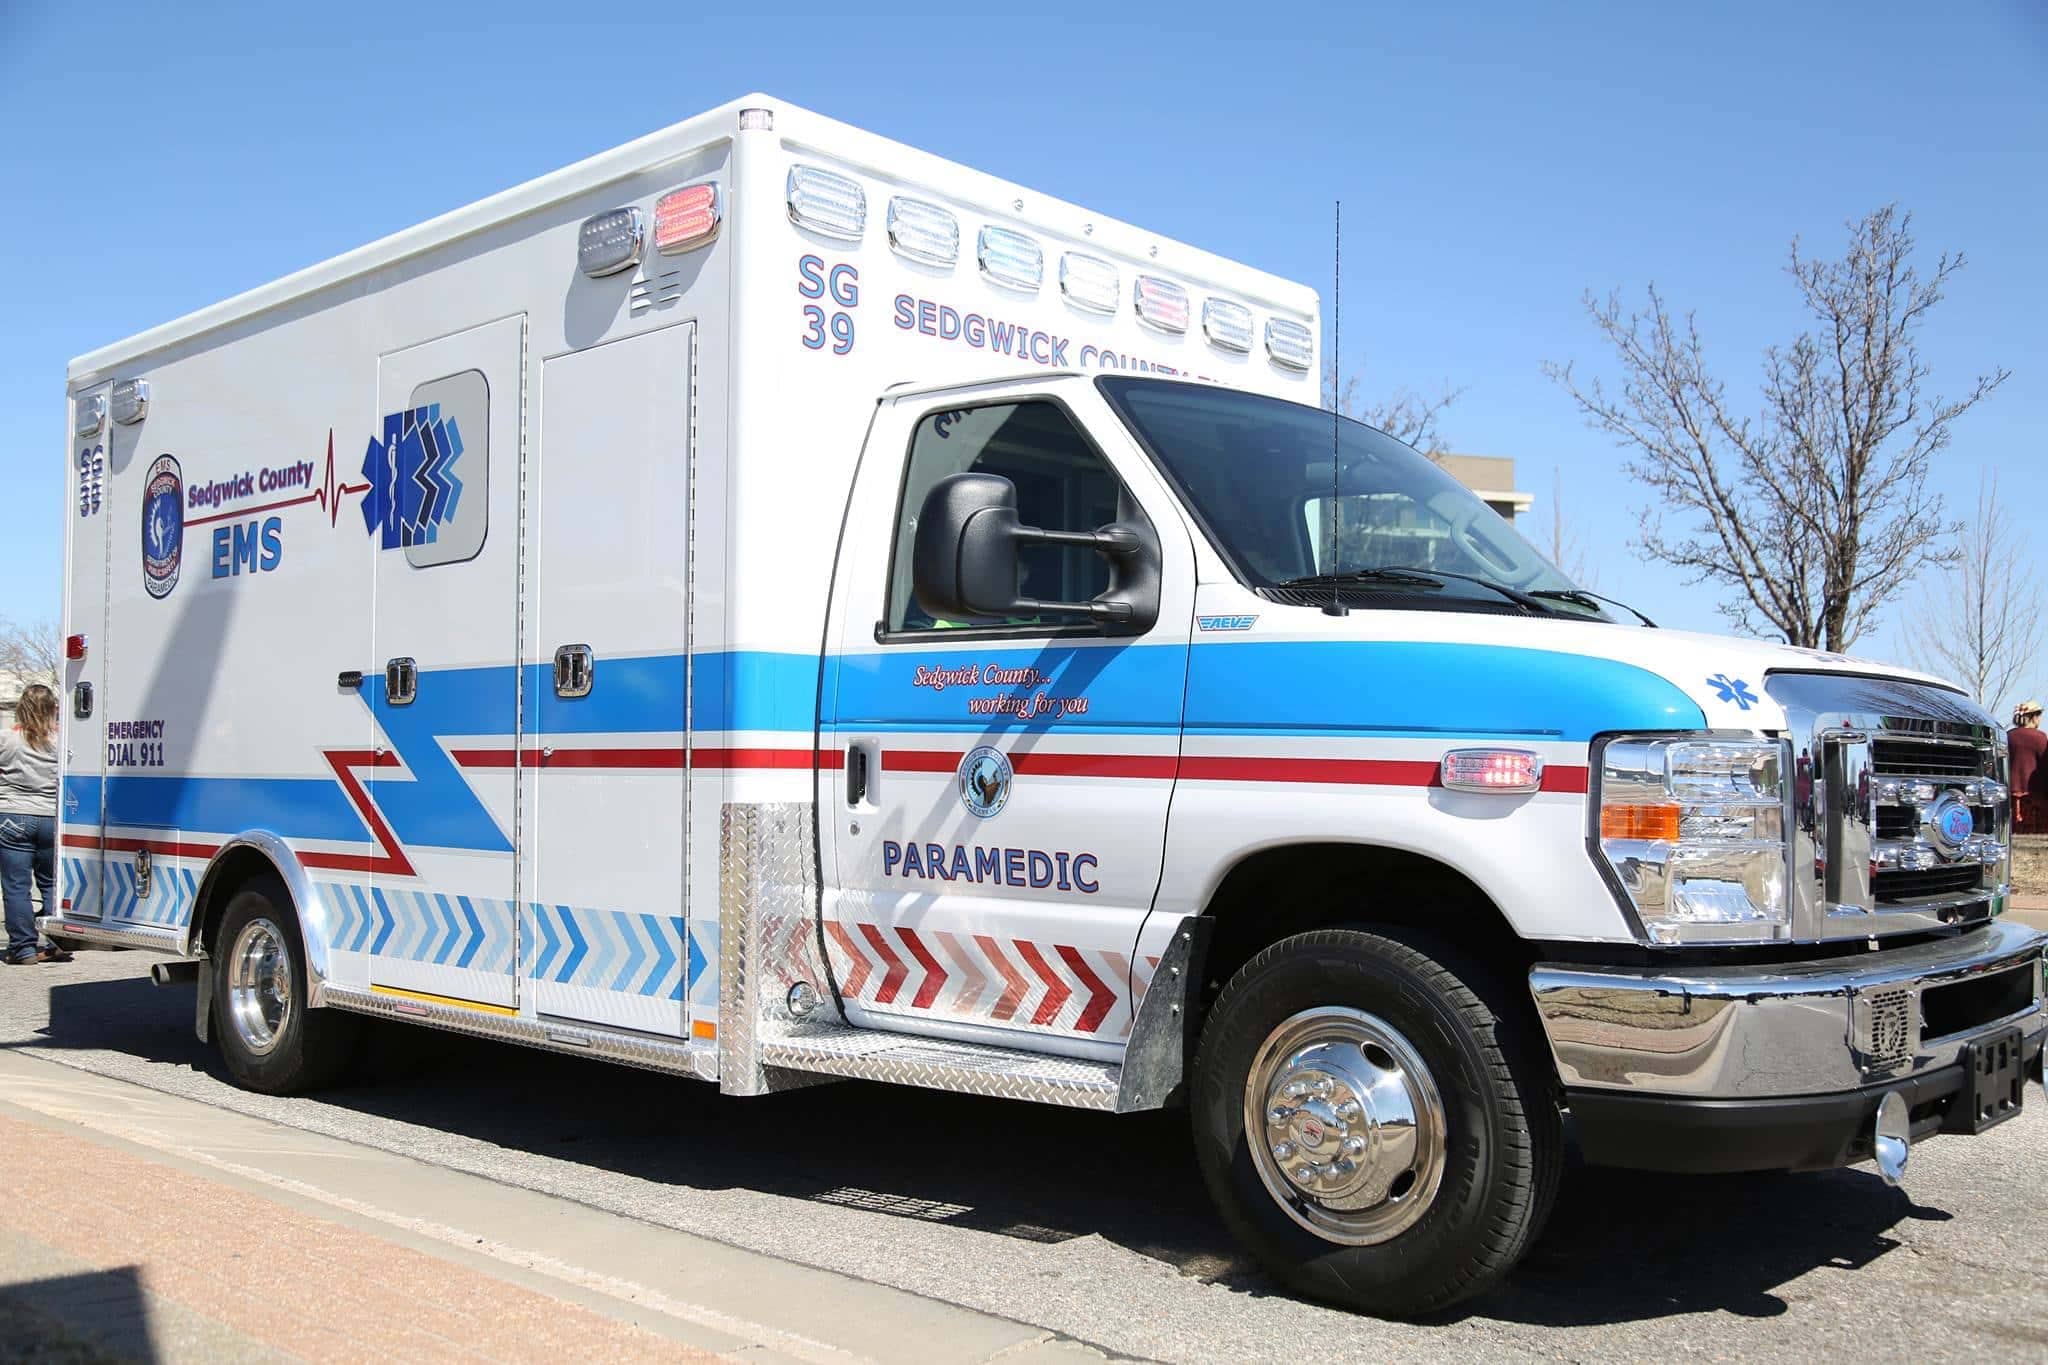 ems-ambulance-jpg